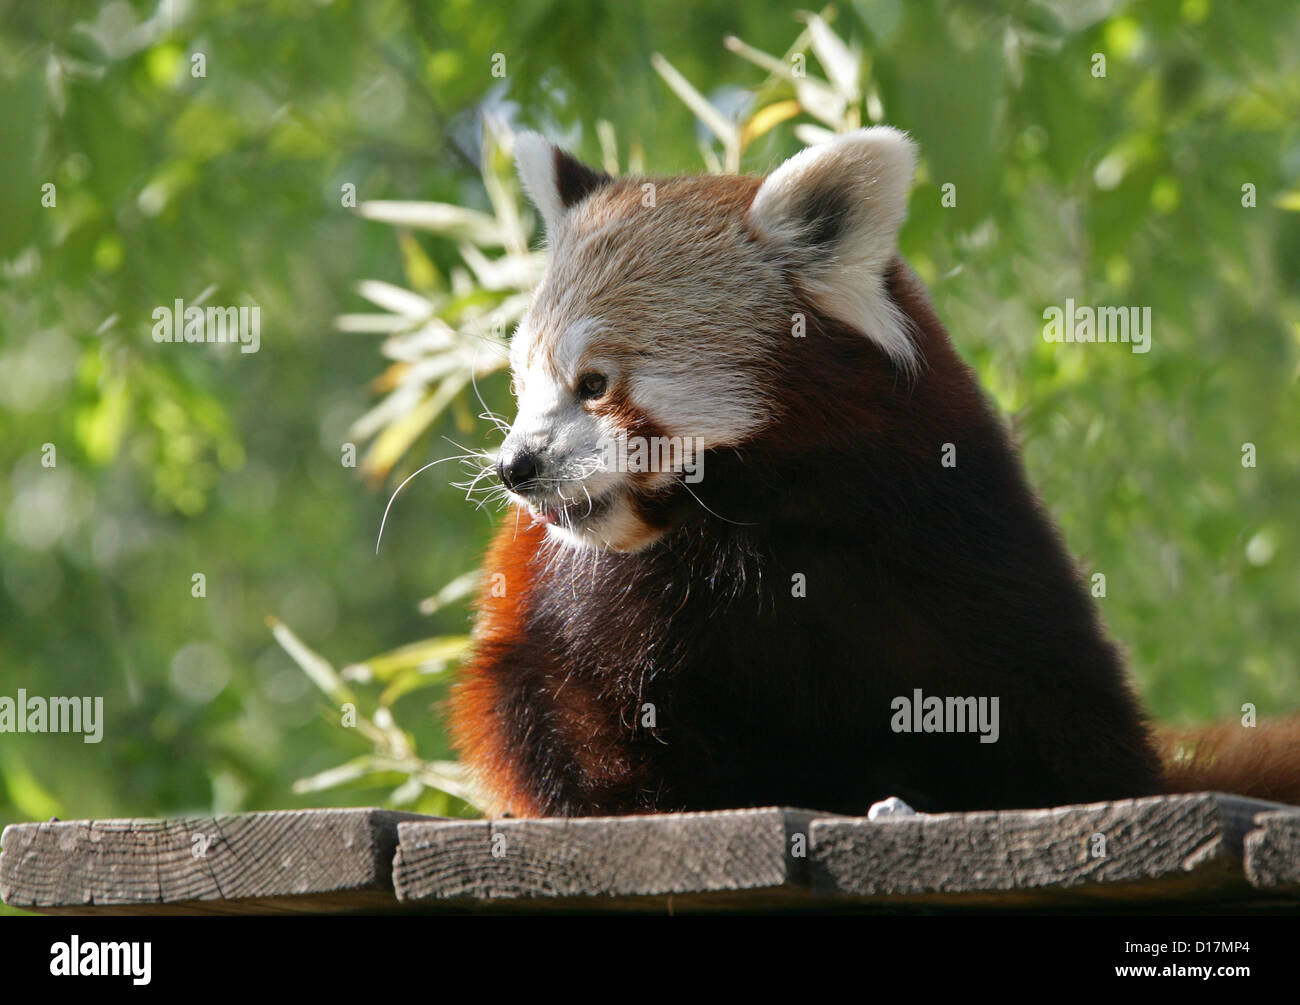 Red Panda, Ailurus fulgens, Ailuridae. A small arboreal mammal native to the eastern Himalayas and southwestern China. Stock Photo